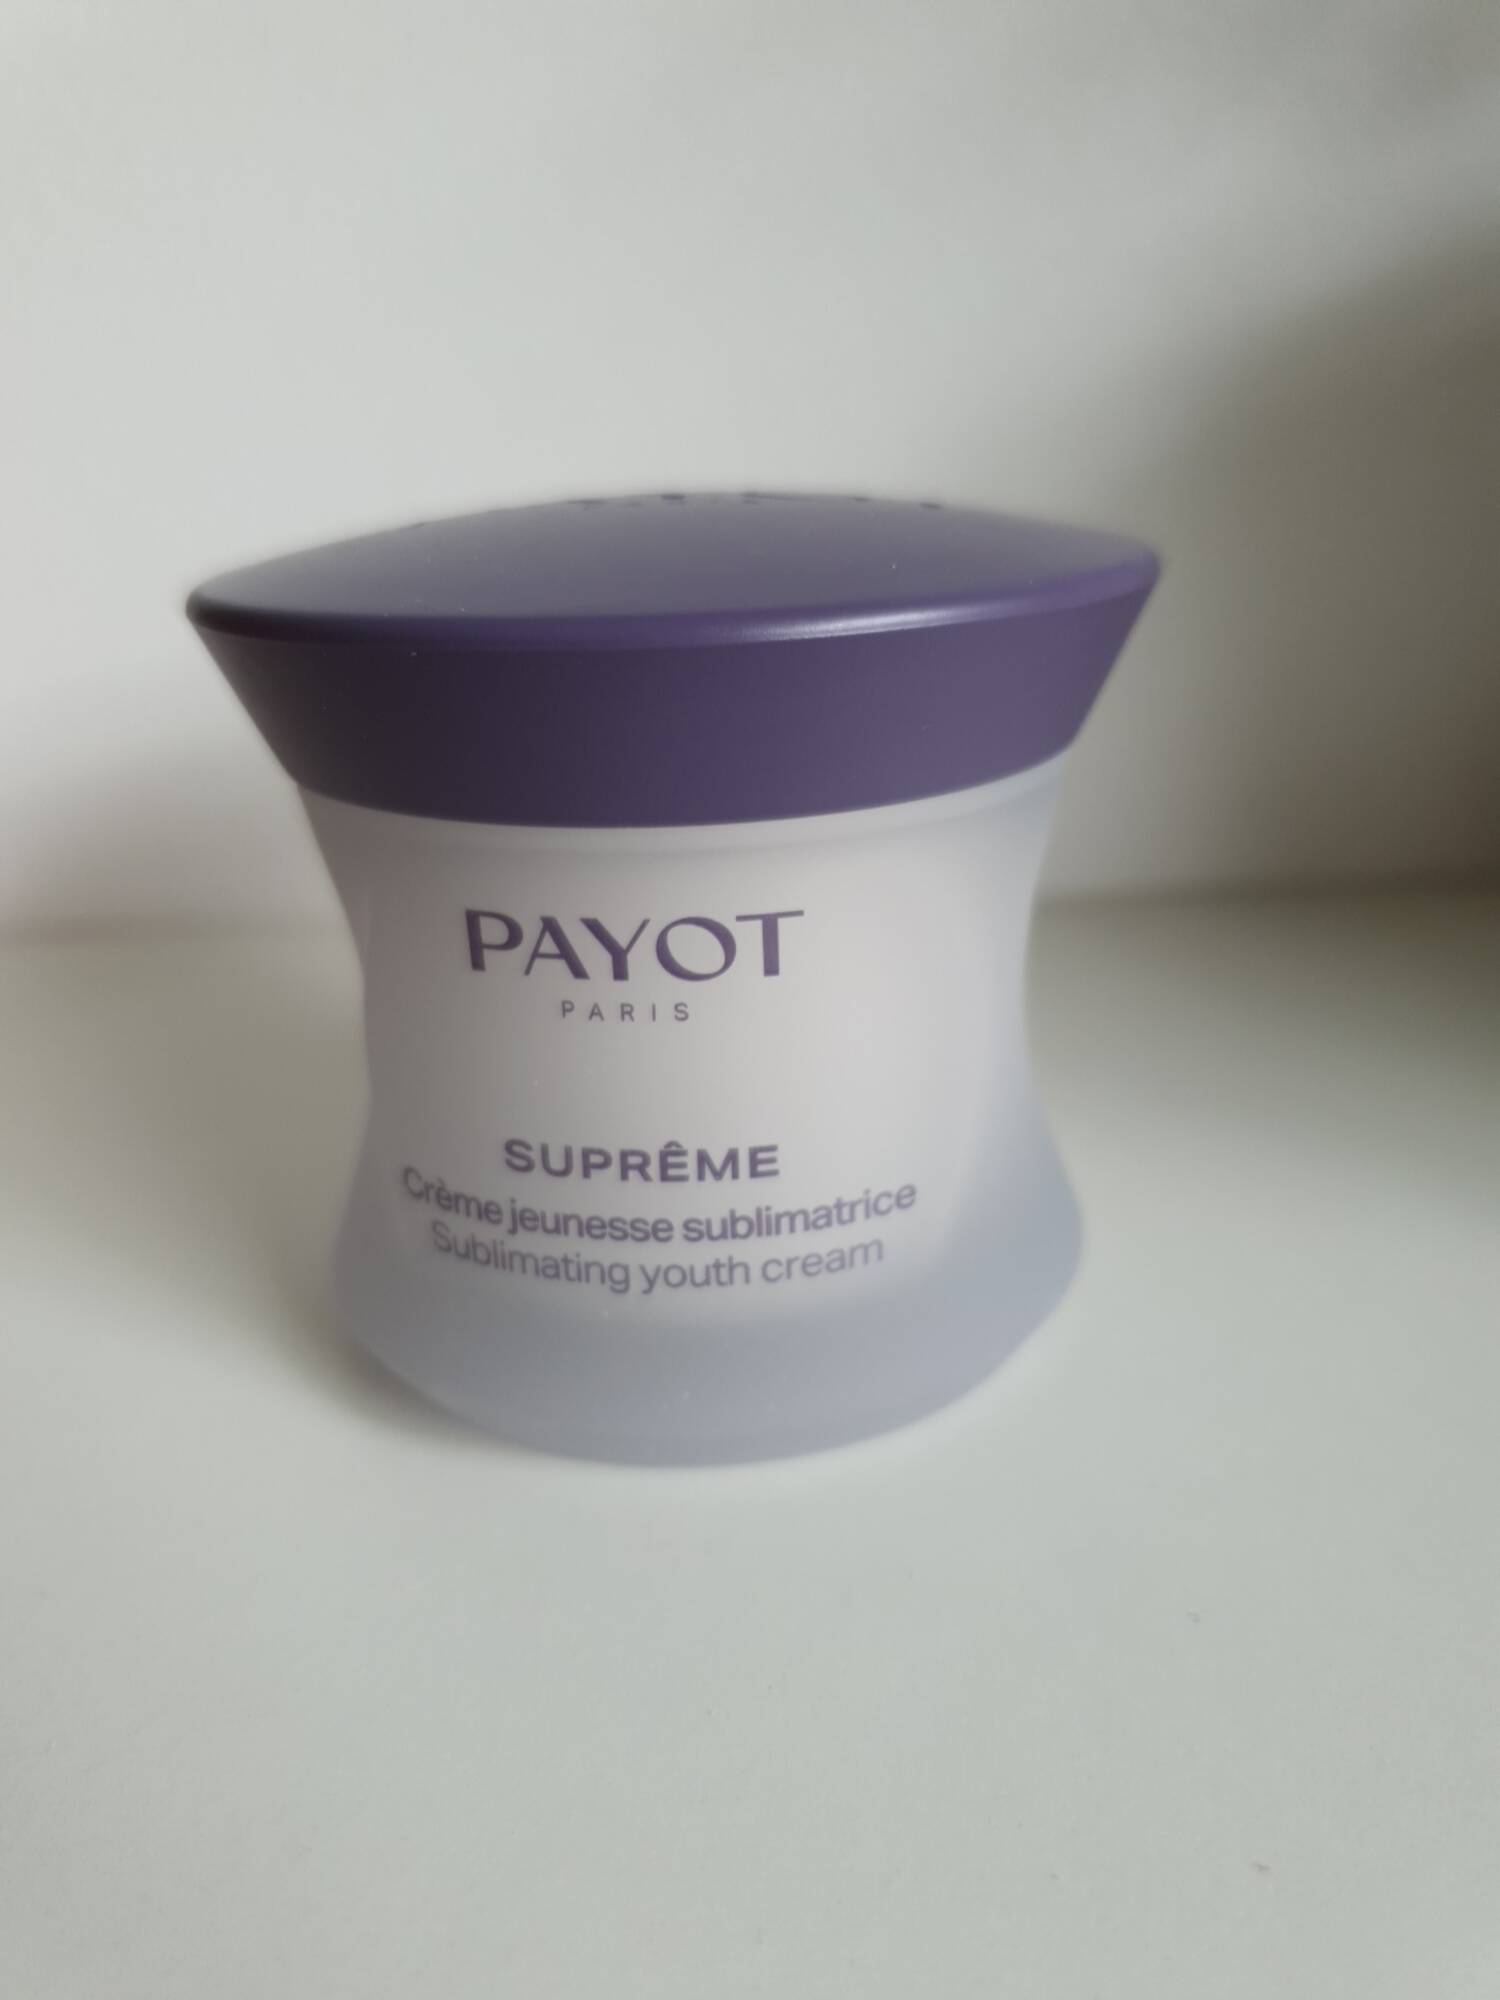 PAYOT - Suprême - crème jeunesse sublimatrice